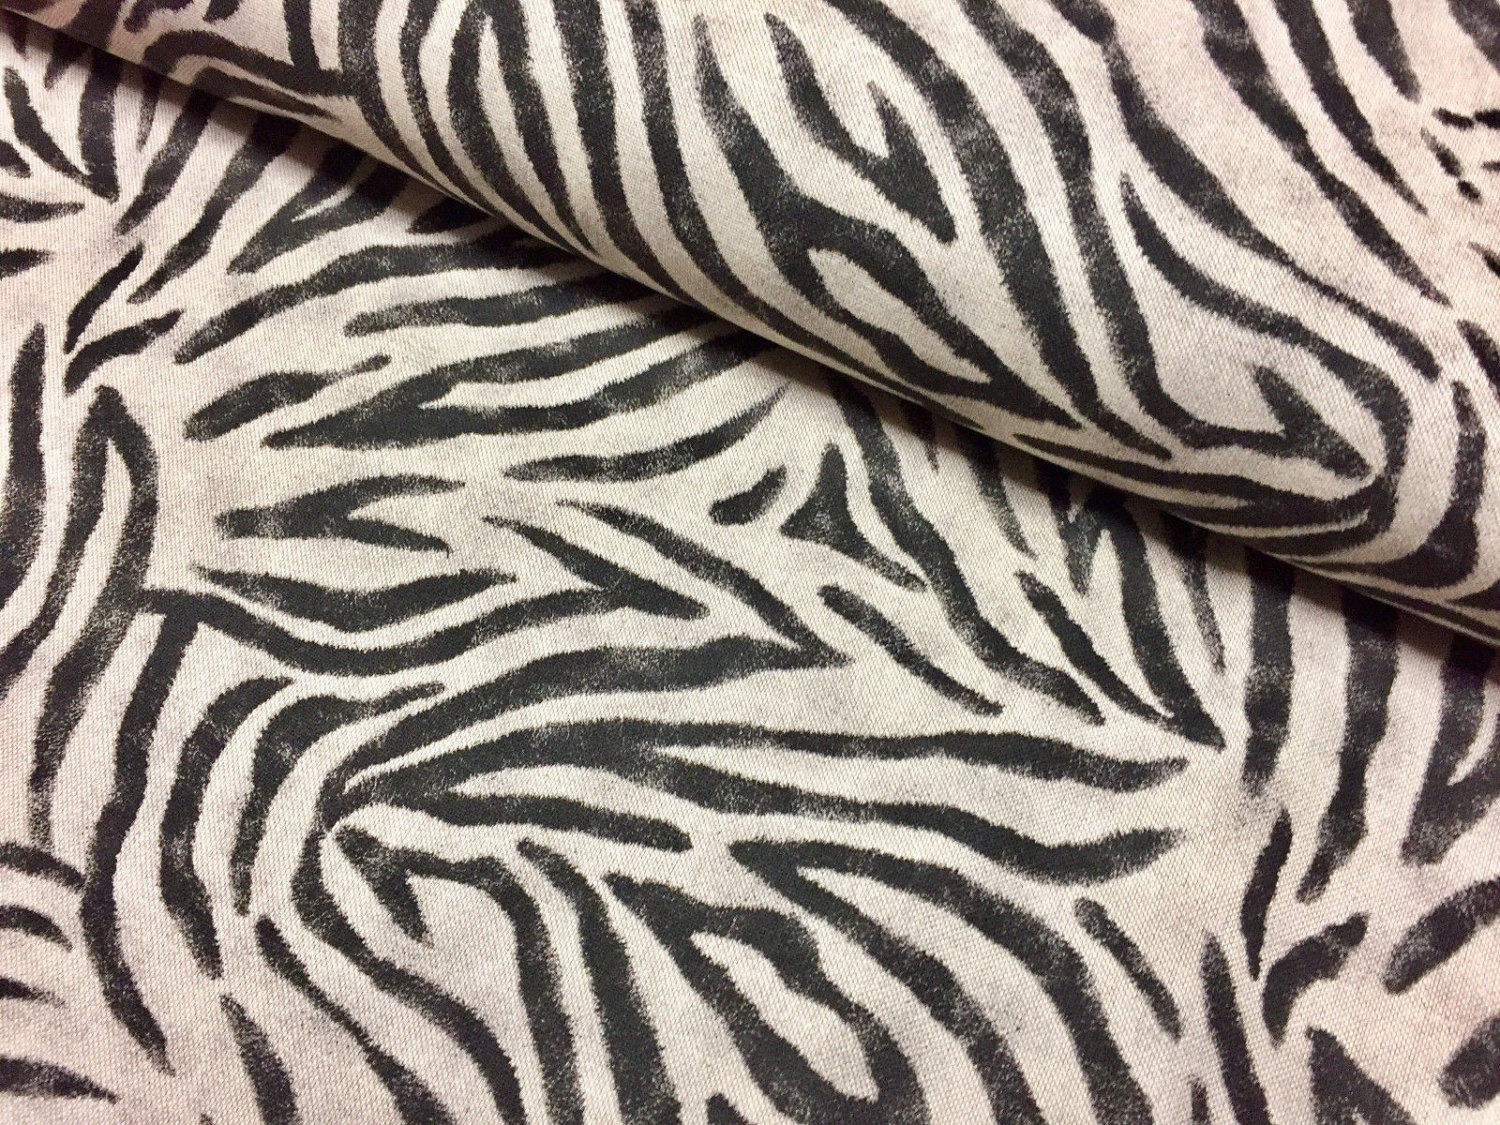 ZEBRA Animal Print Fabric - Linen Cotton Blend - curtains upholstery